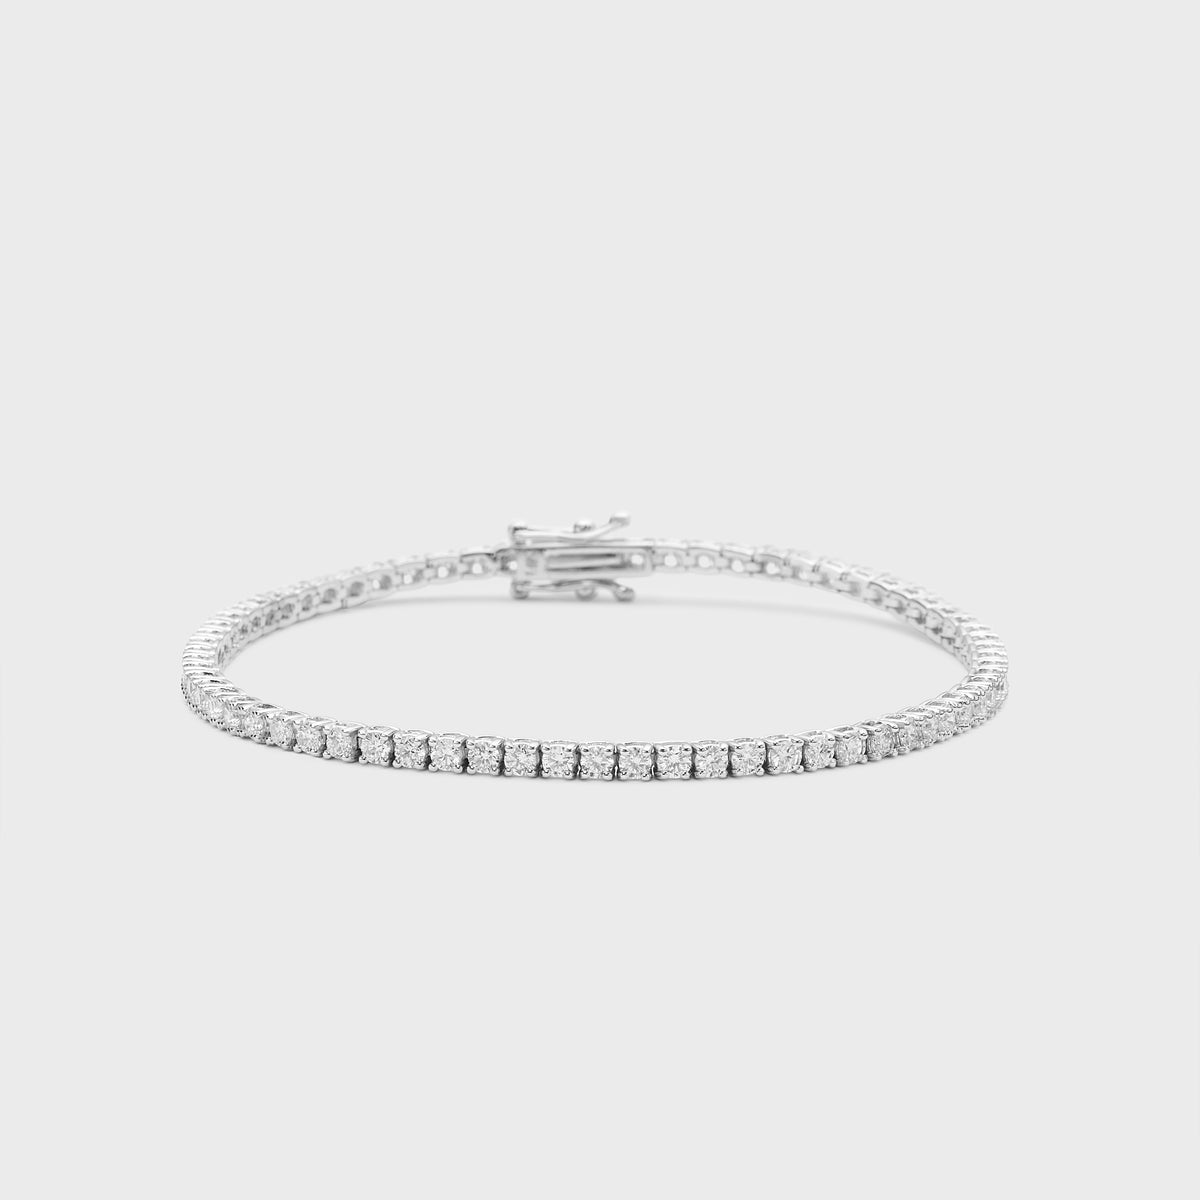 Diamond Tennis Bracelet - The Clear Cut Collection